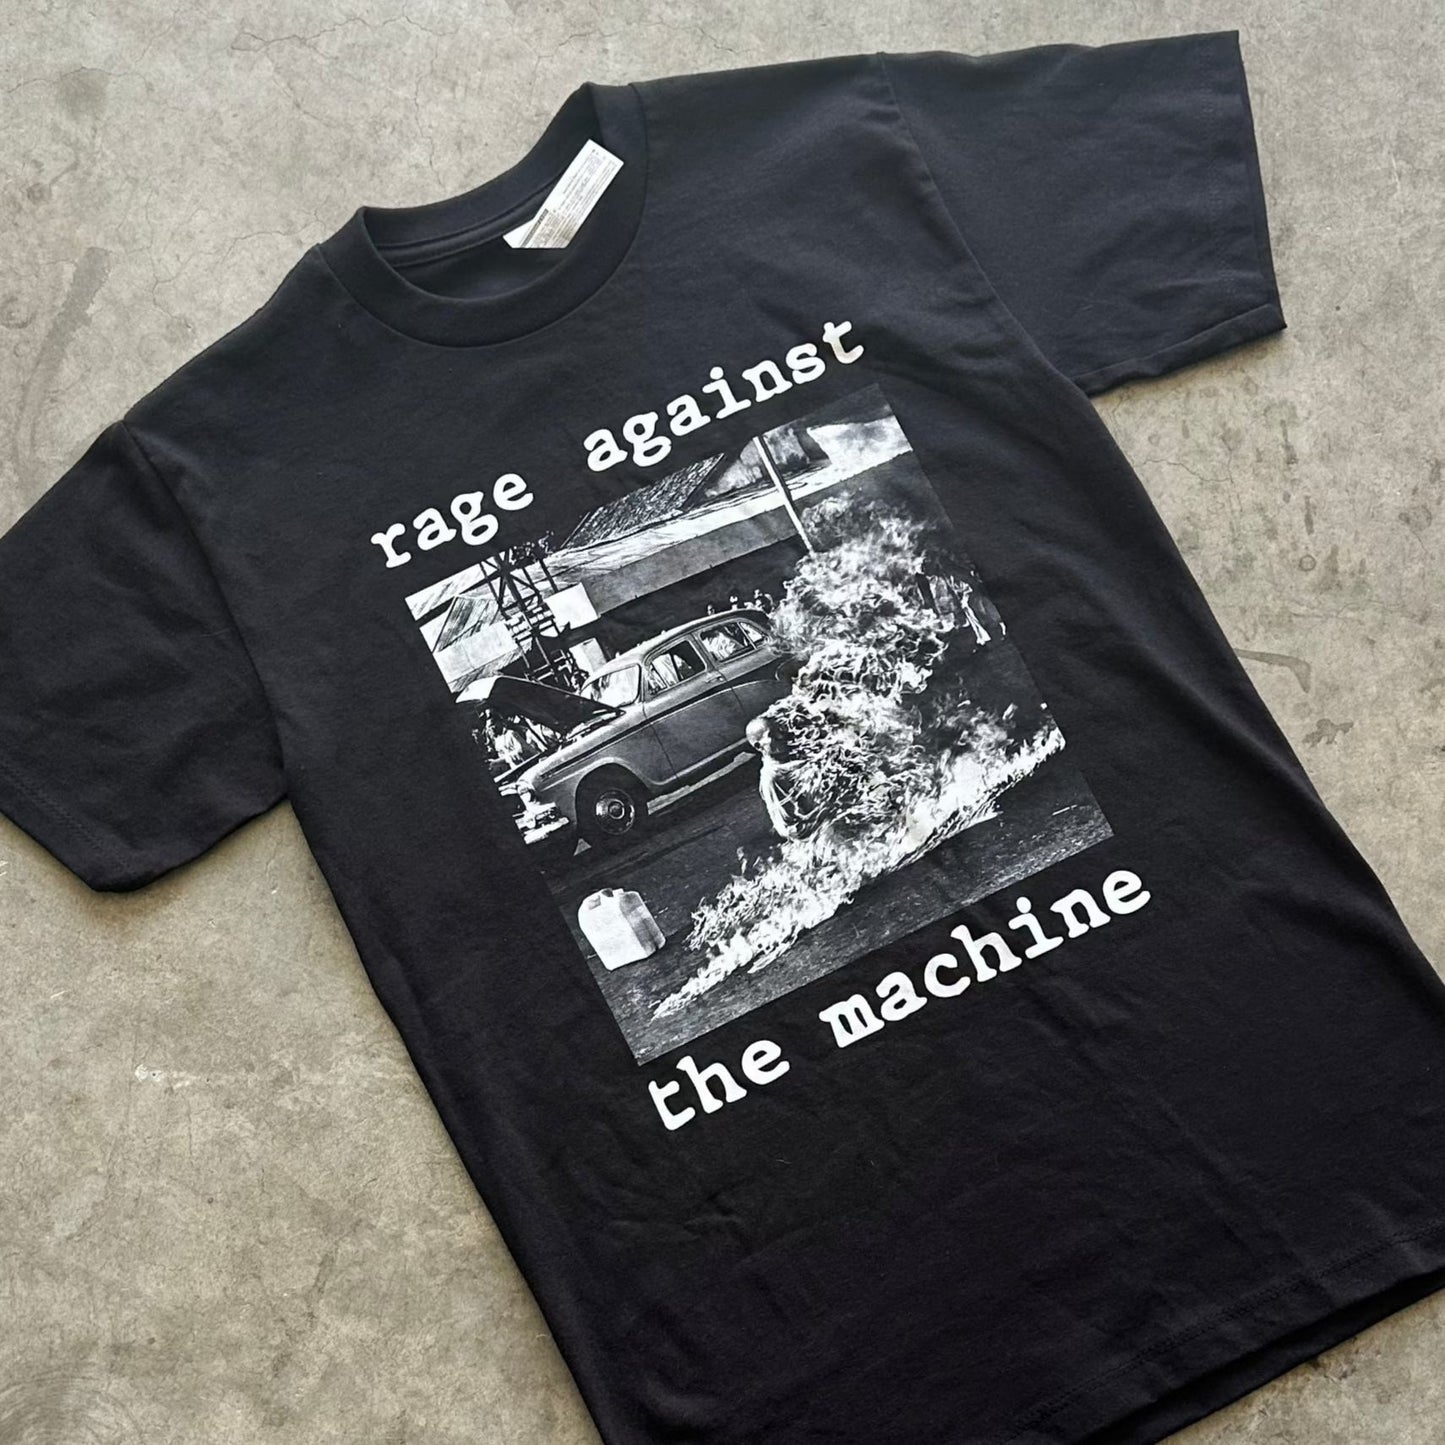 Rage Against the Machine Tee